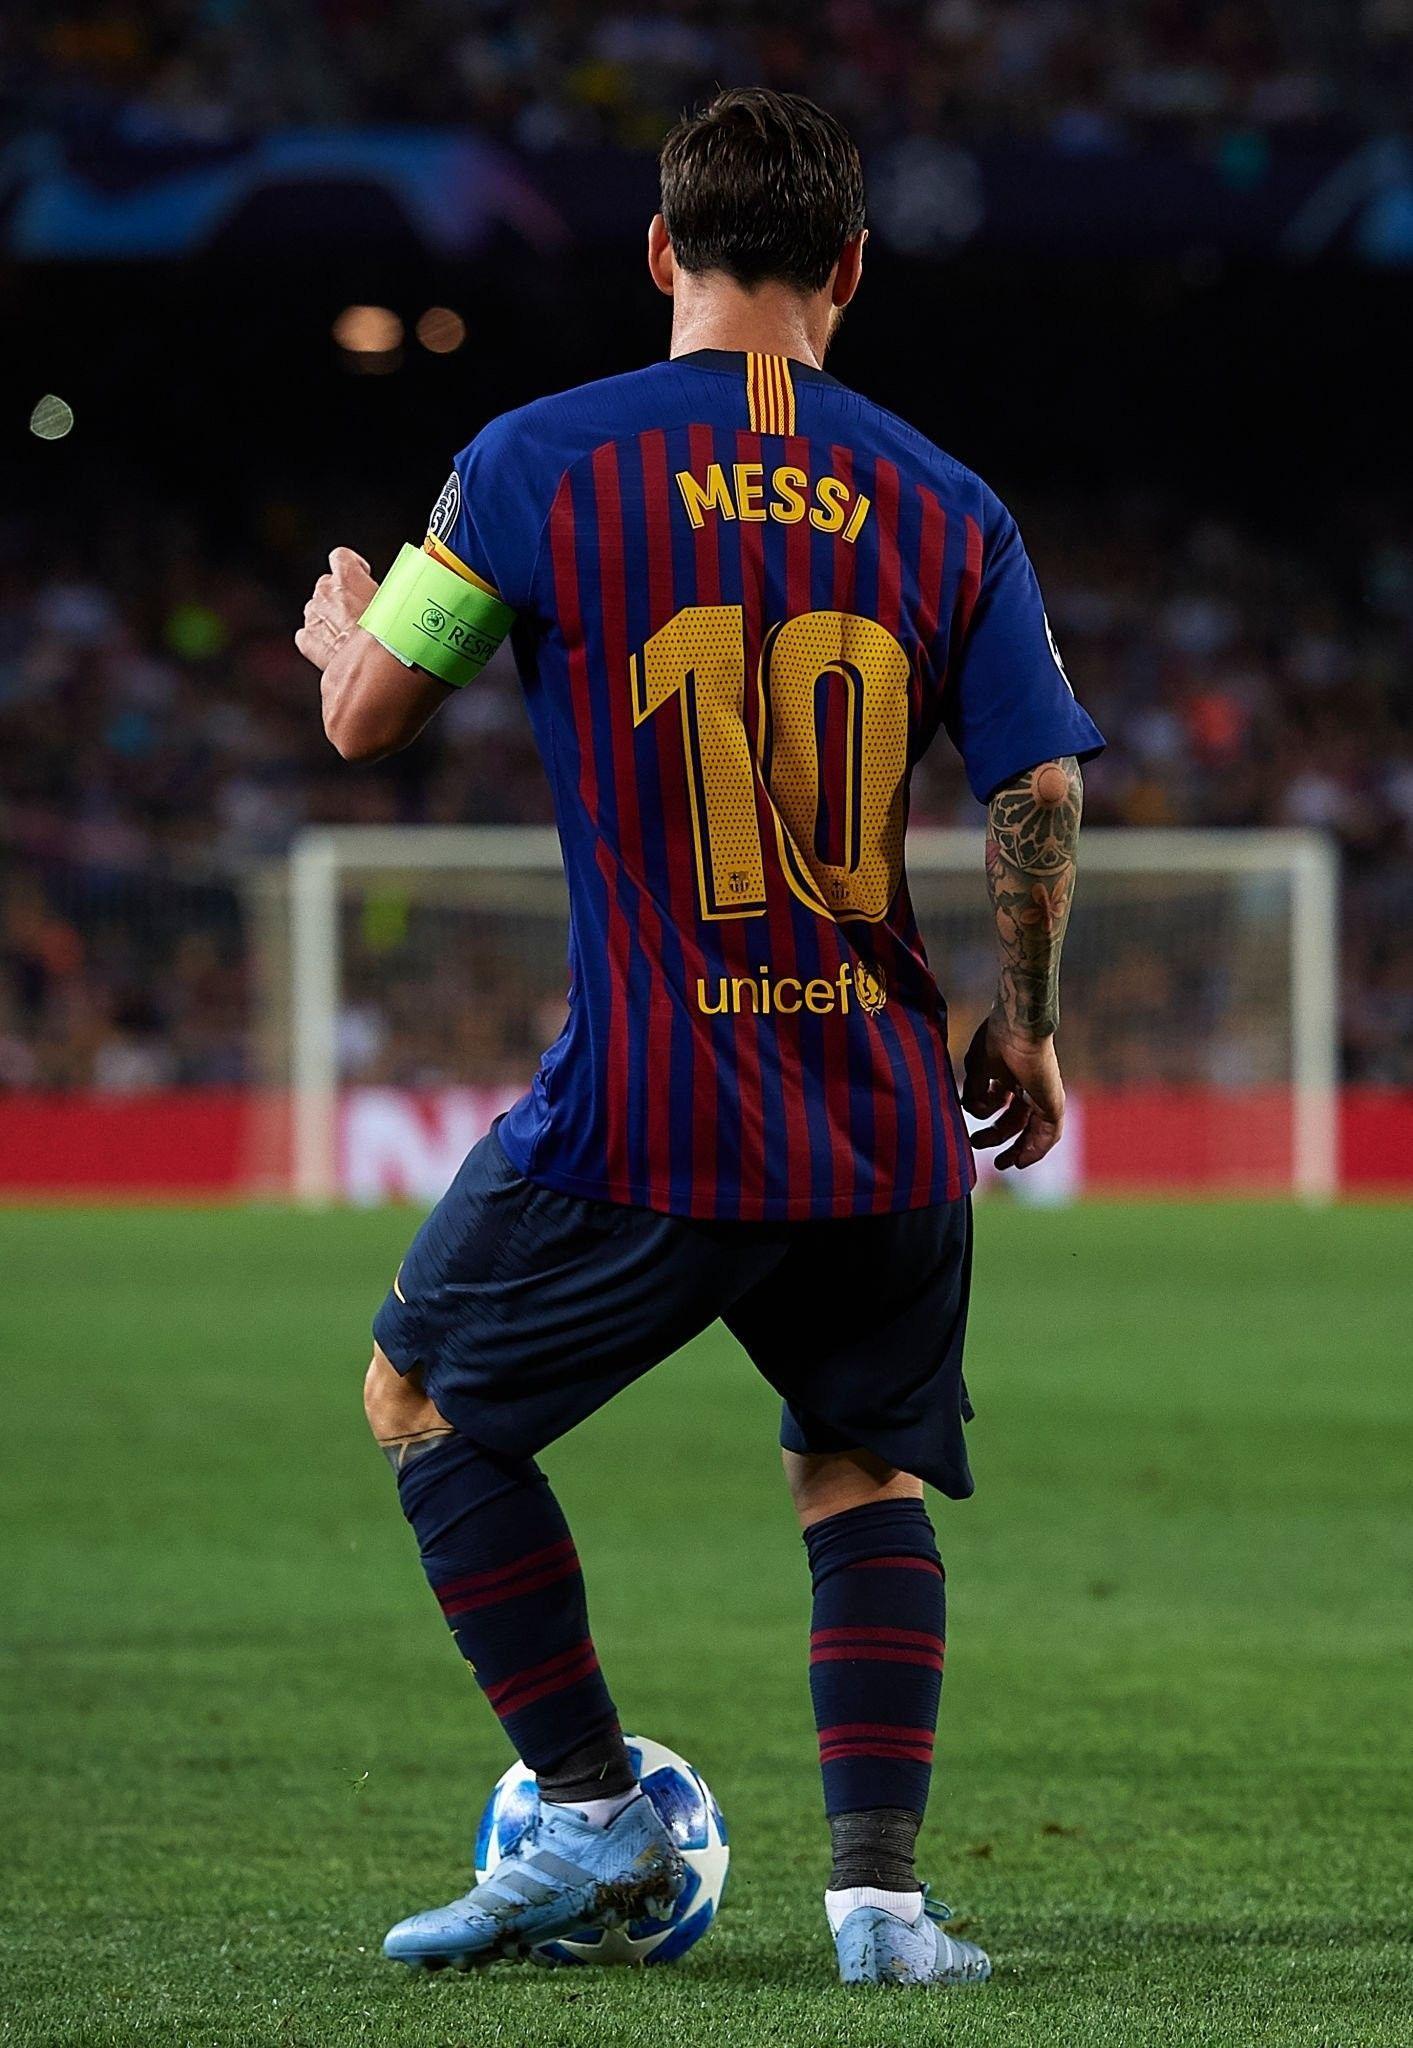 Barcelona 2019. Football. Messi, Lionel Messi, FC Barcelona